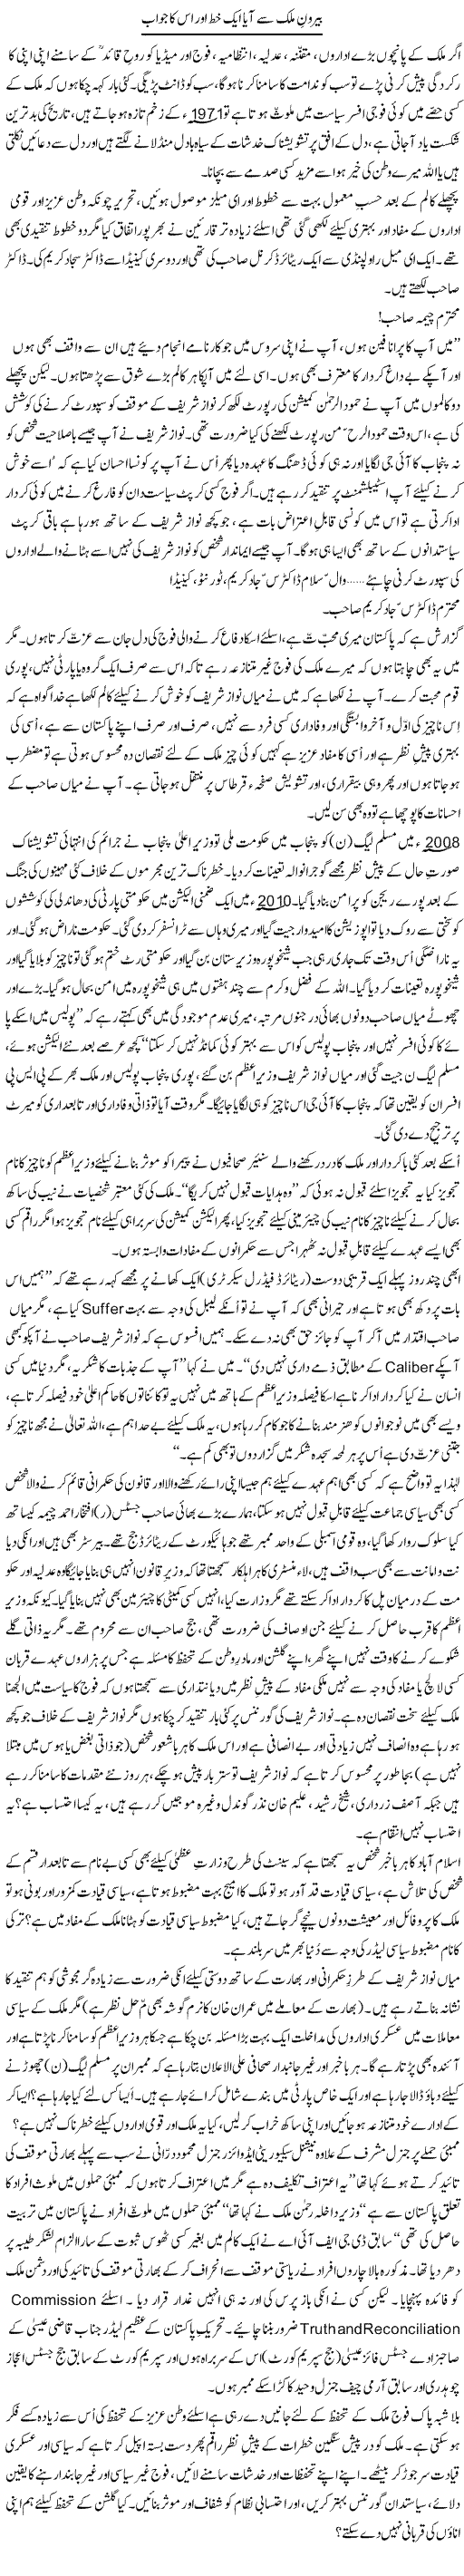 Biron Mulk Se Aaya Aik Khat Aur Is Ka Jawab | Zulfiqar Ahmed Cheema | Daily Urdu Columns